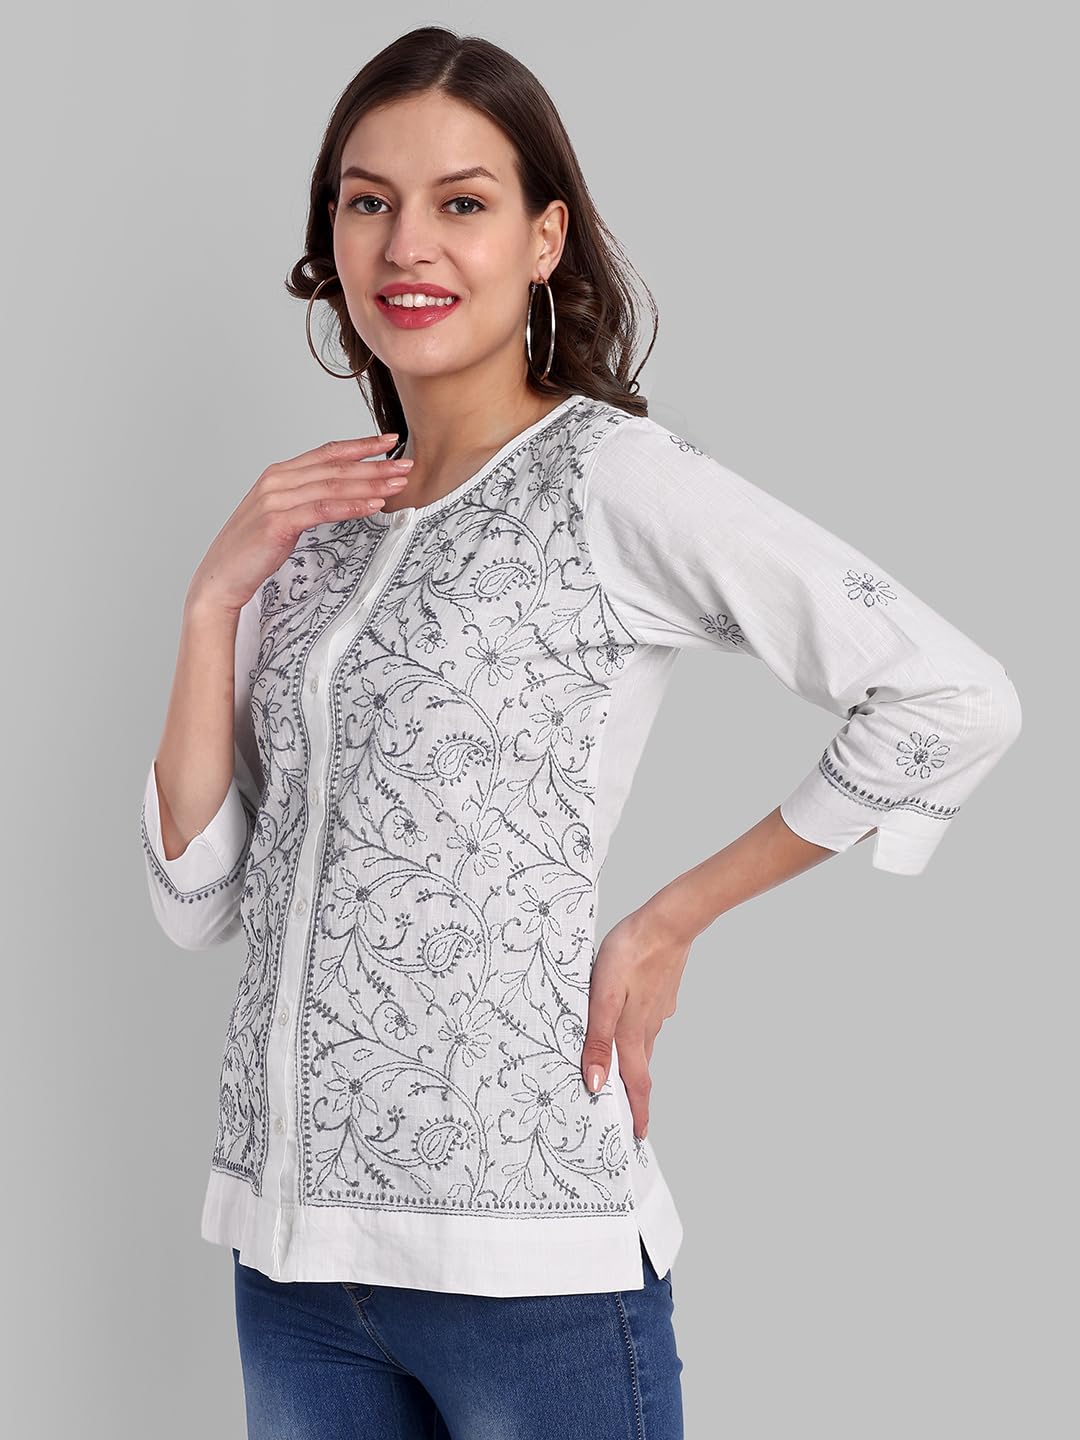 Ada Hand Embroidered Cotton White Straight Top Tunic Lucknowi Chikankari Short Kurti for Women A911363 (2XL)